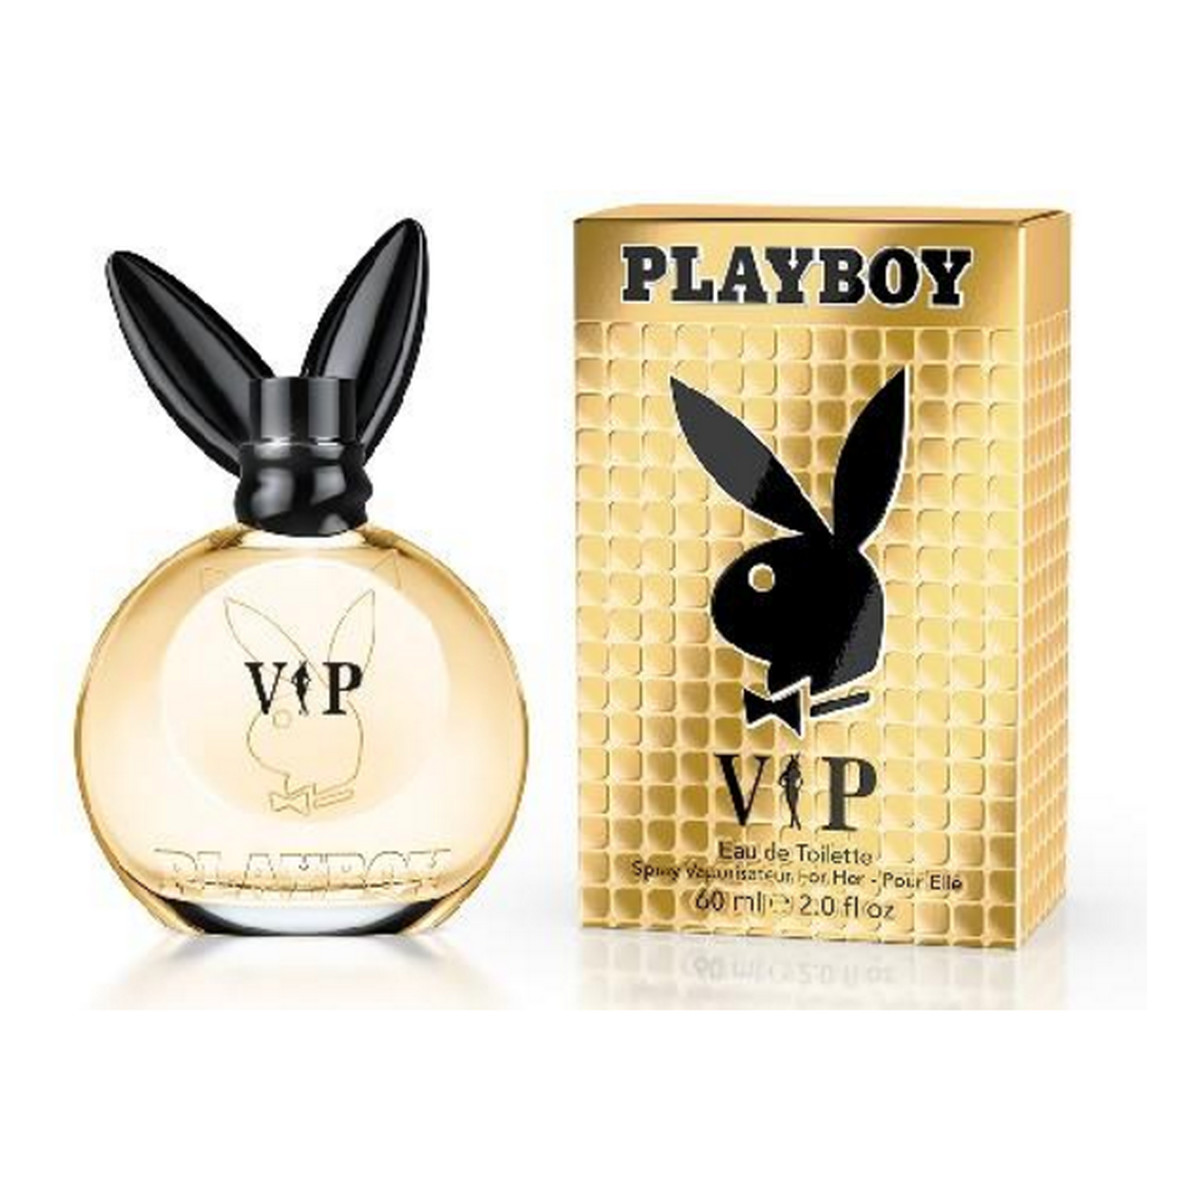 Playboy Vip For Her woda toaletowa 60ml